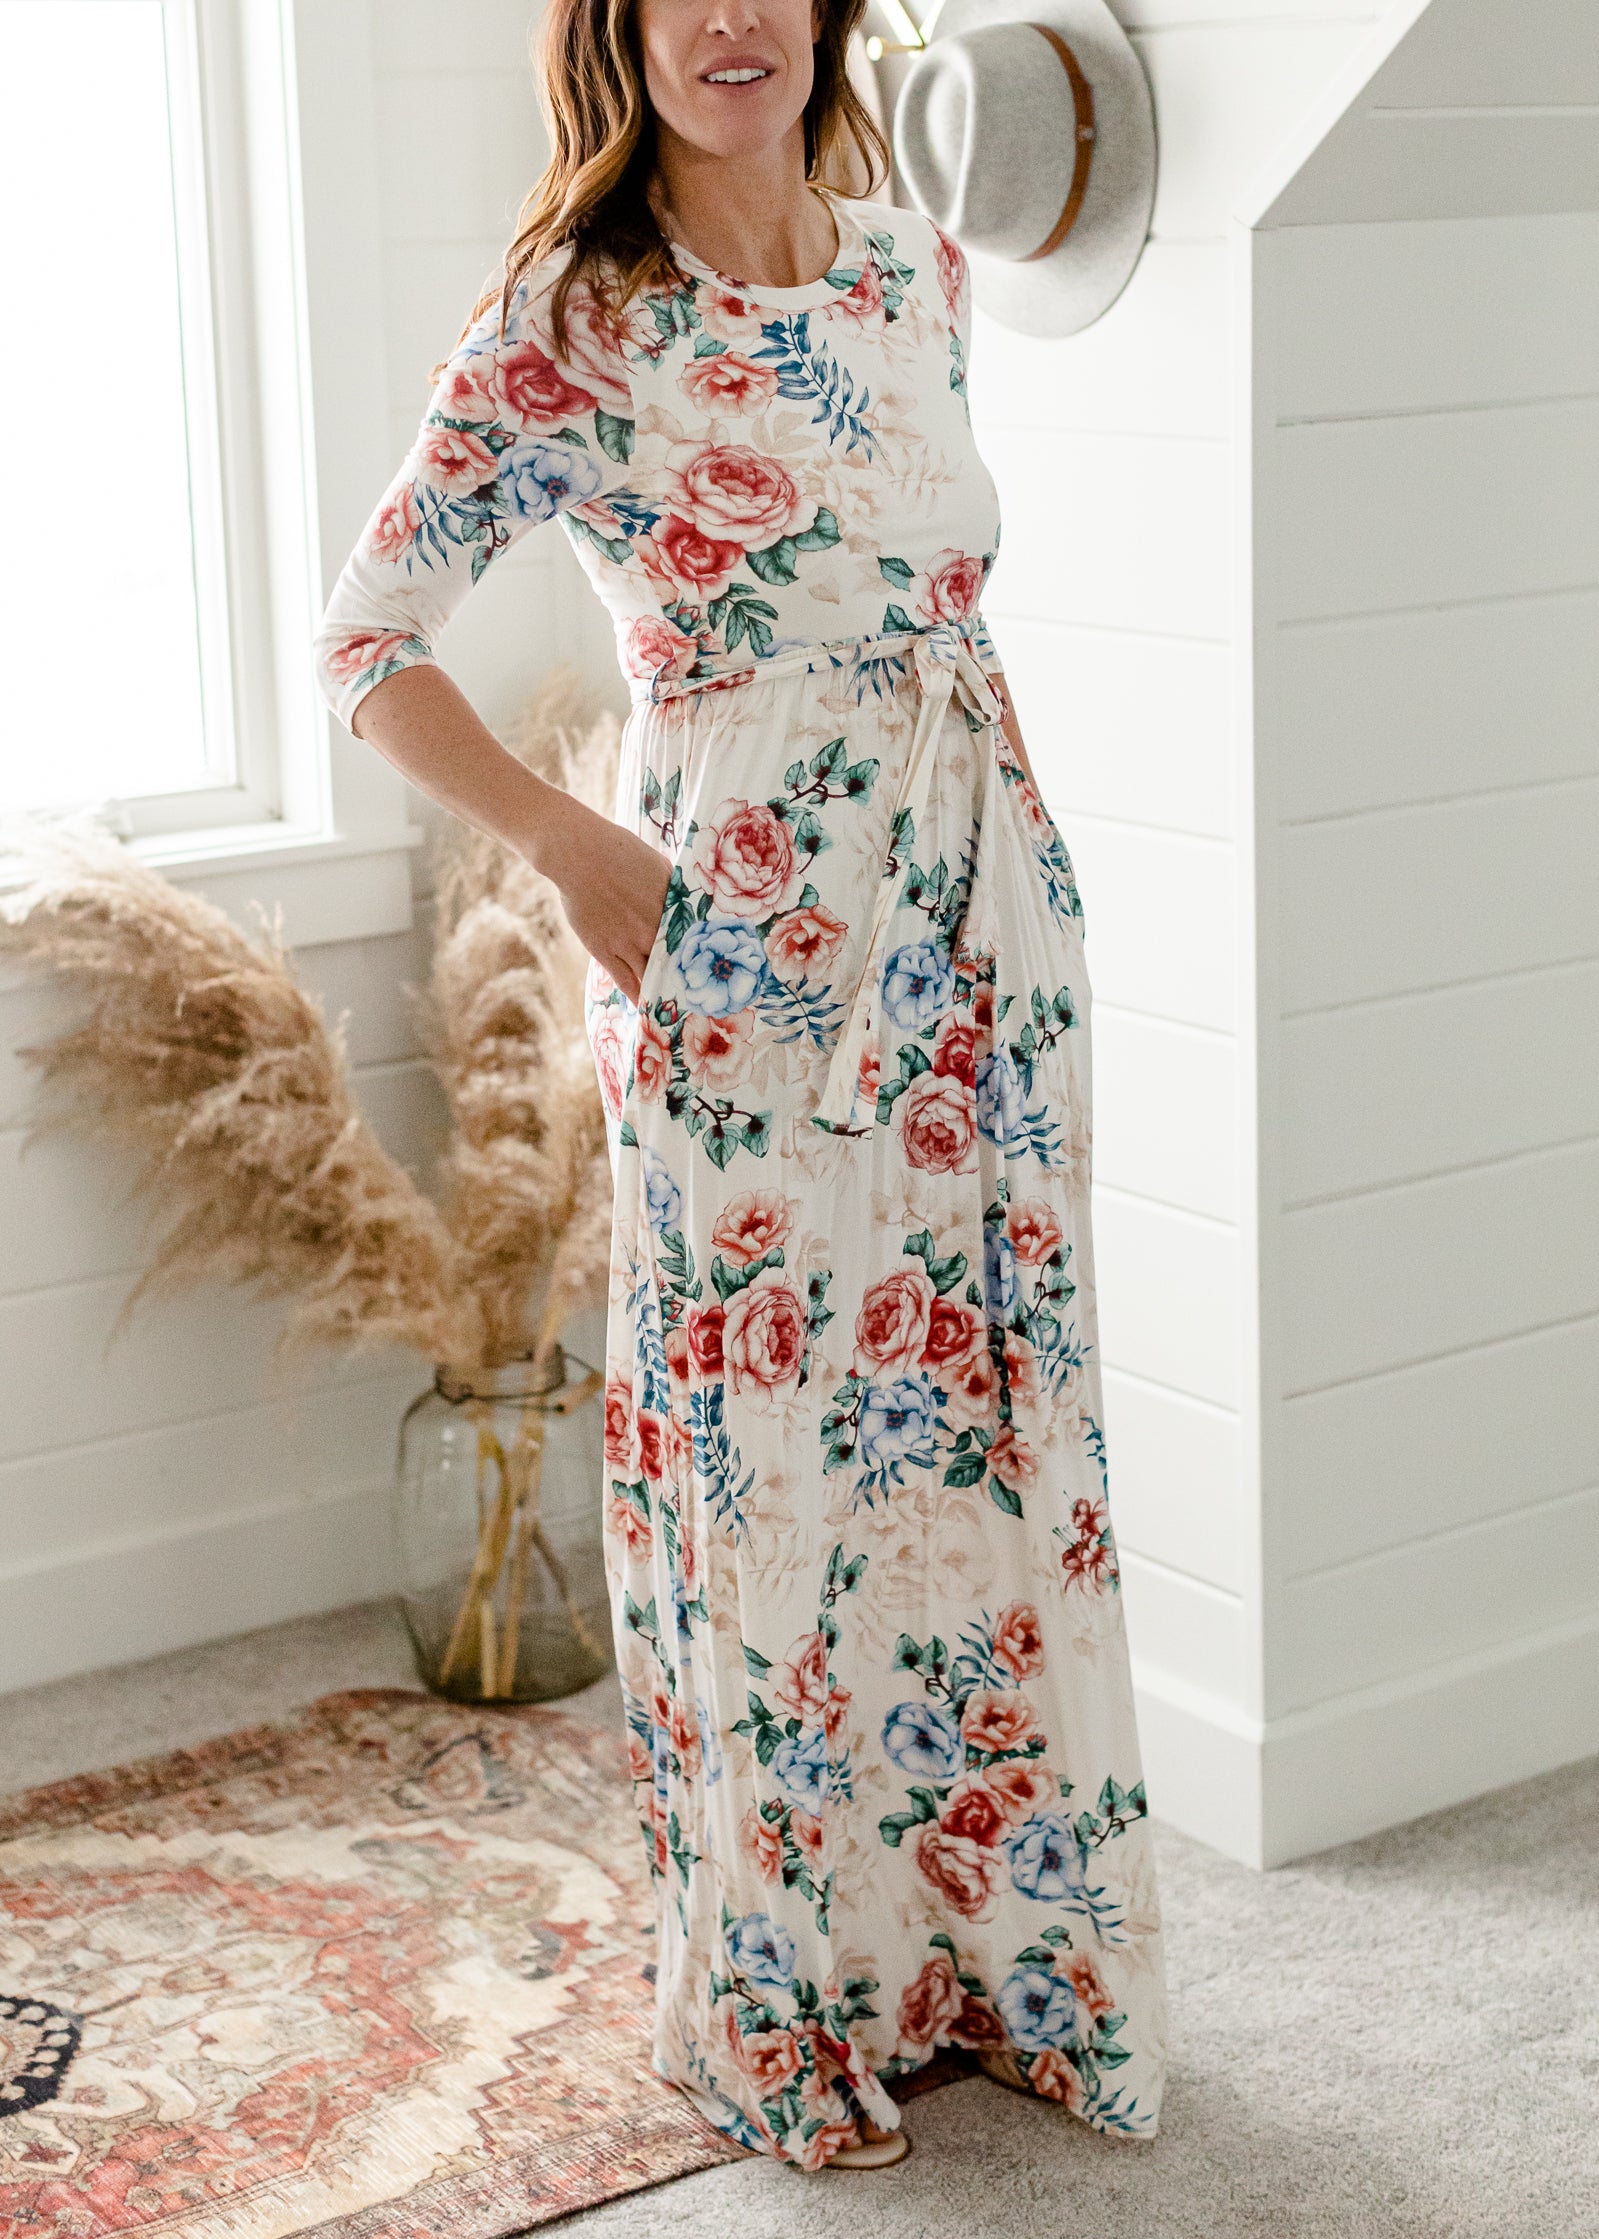 Floral 3/4 Sleeve Belted Maxi Dress - FINAL SALE Dresses